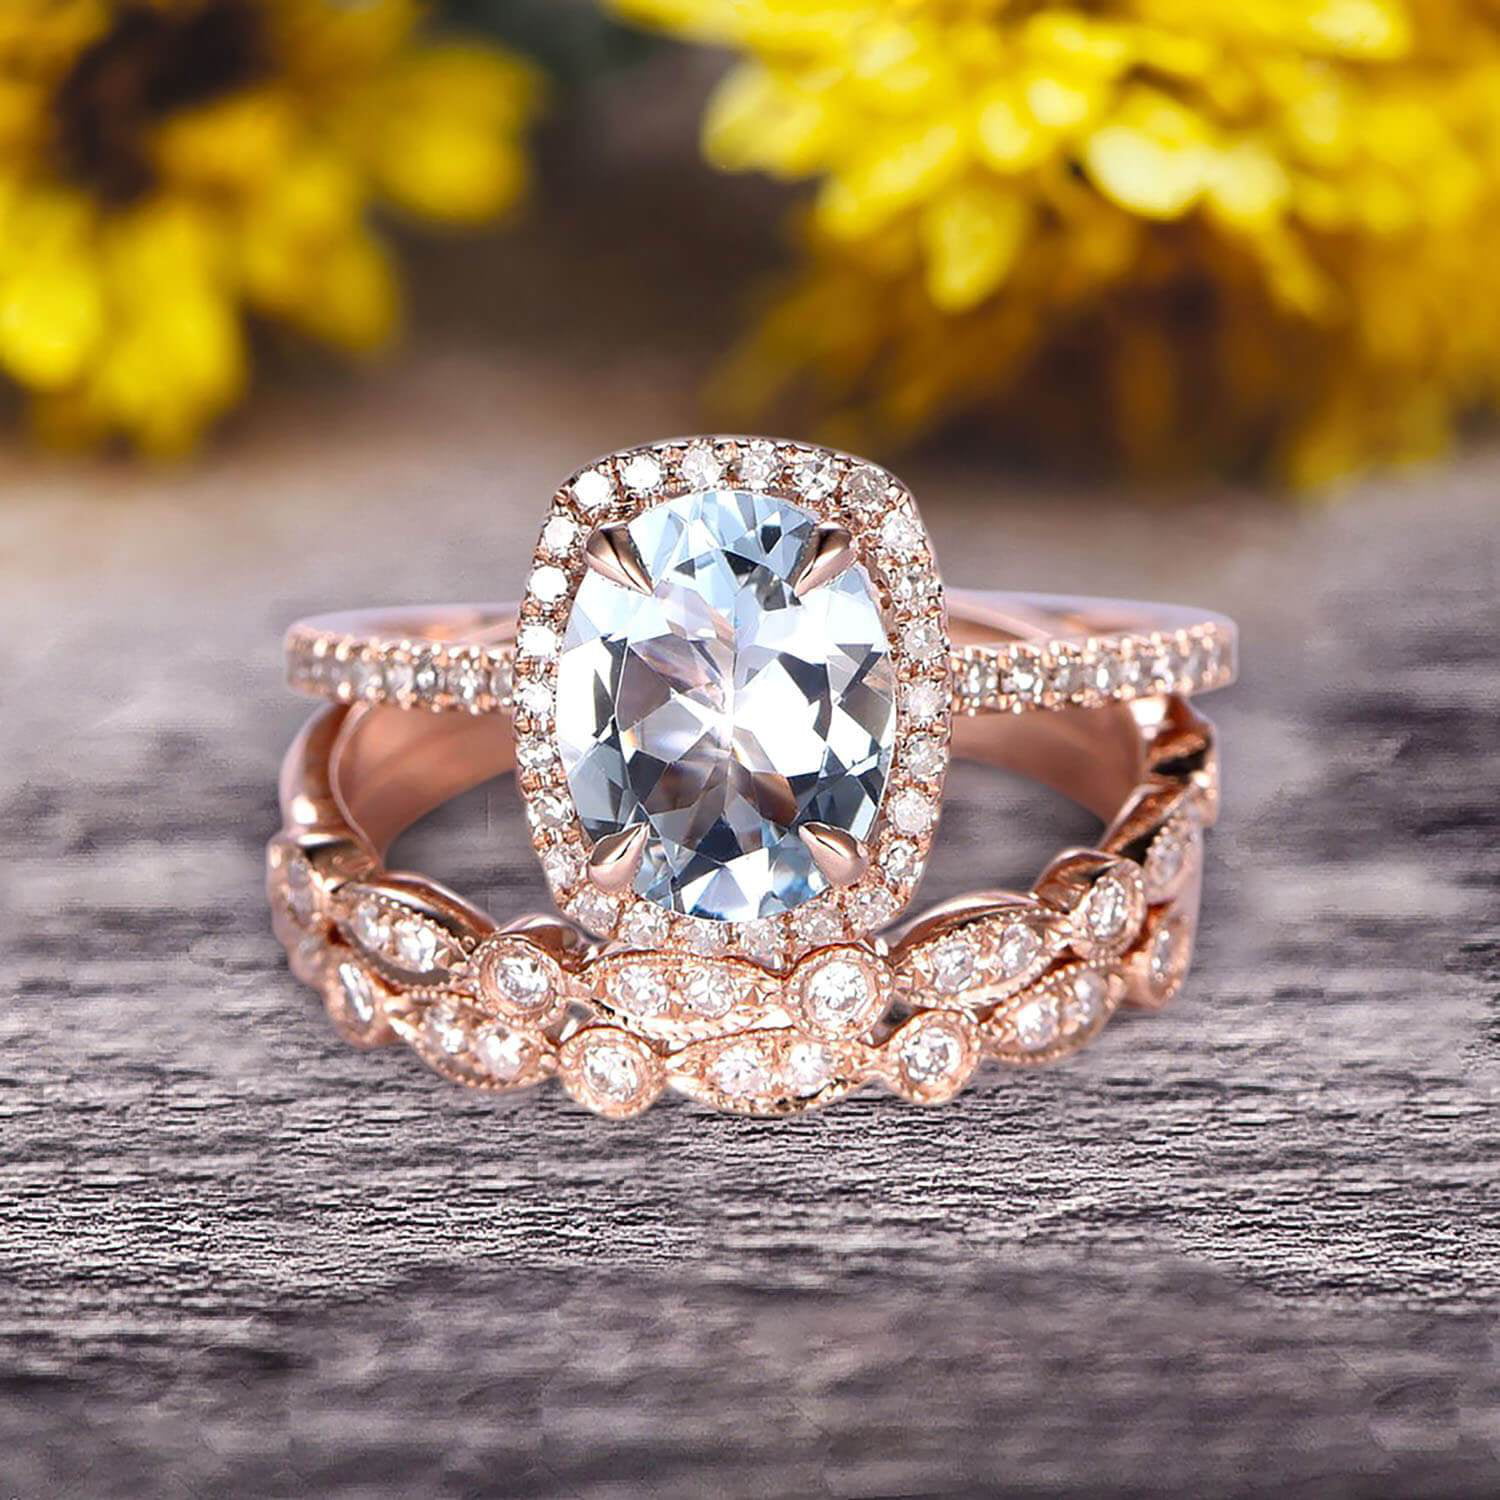 2pcs Aquamarine engagement ring with diamond set,Solid 14k White gold  bridal ring,8mm Oval gem Twisted Wedding band custom made fine jewelry